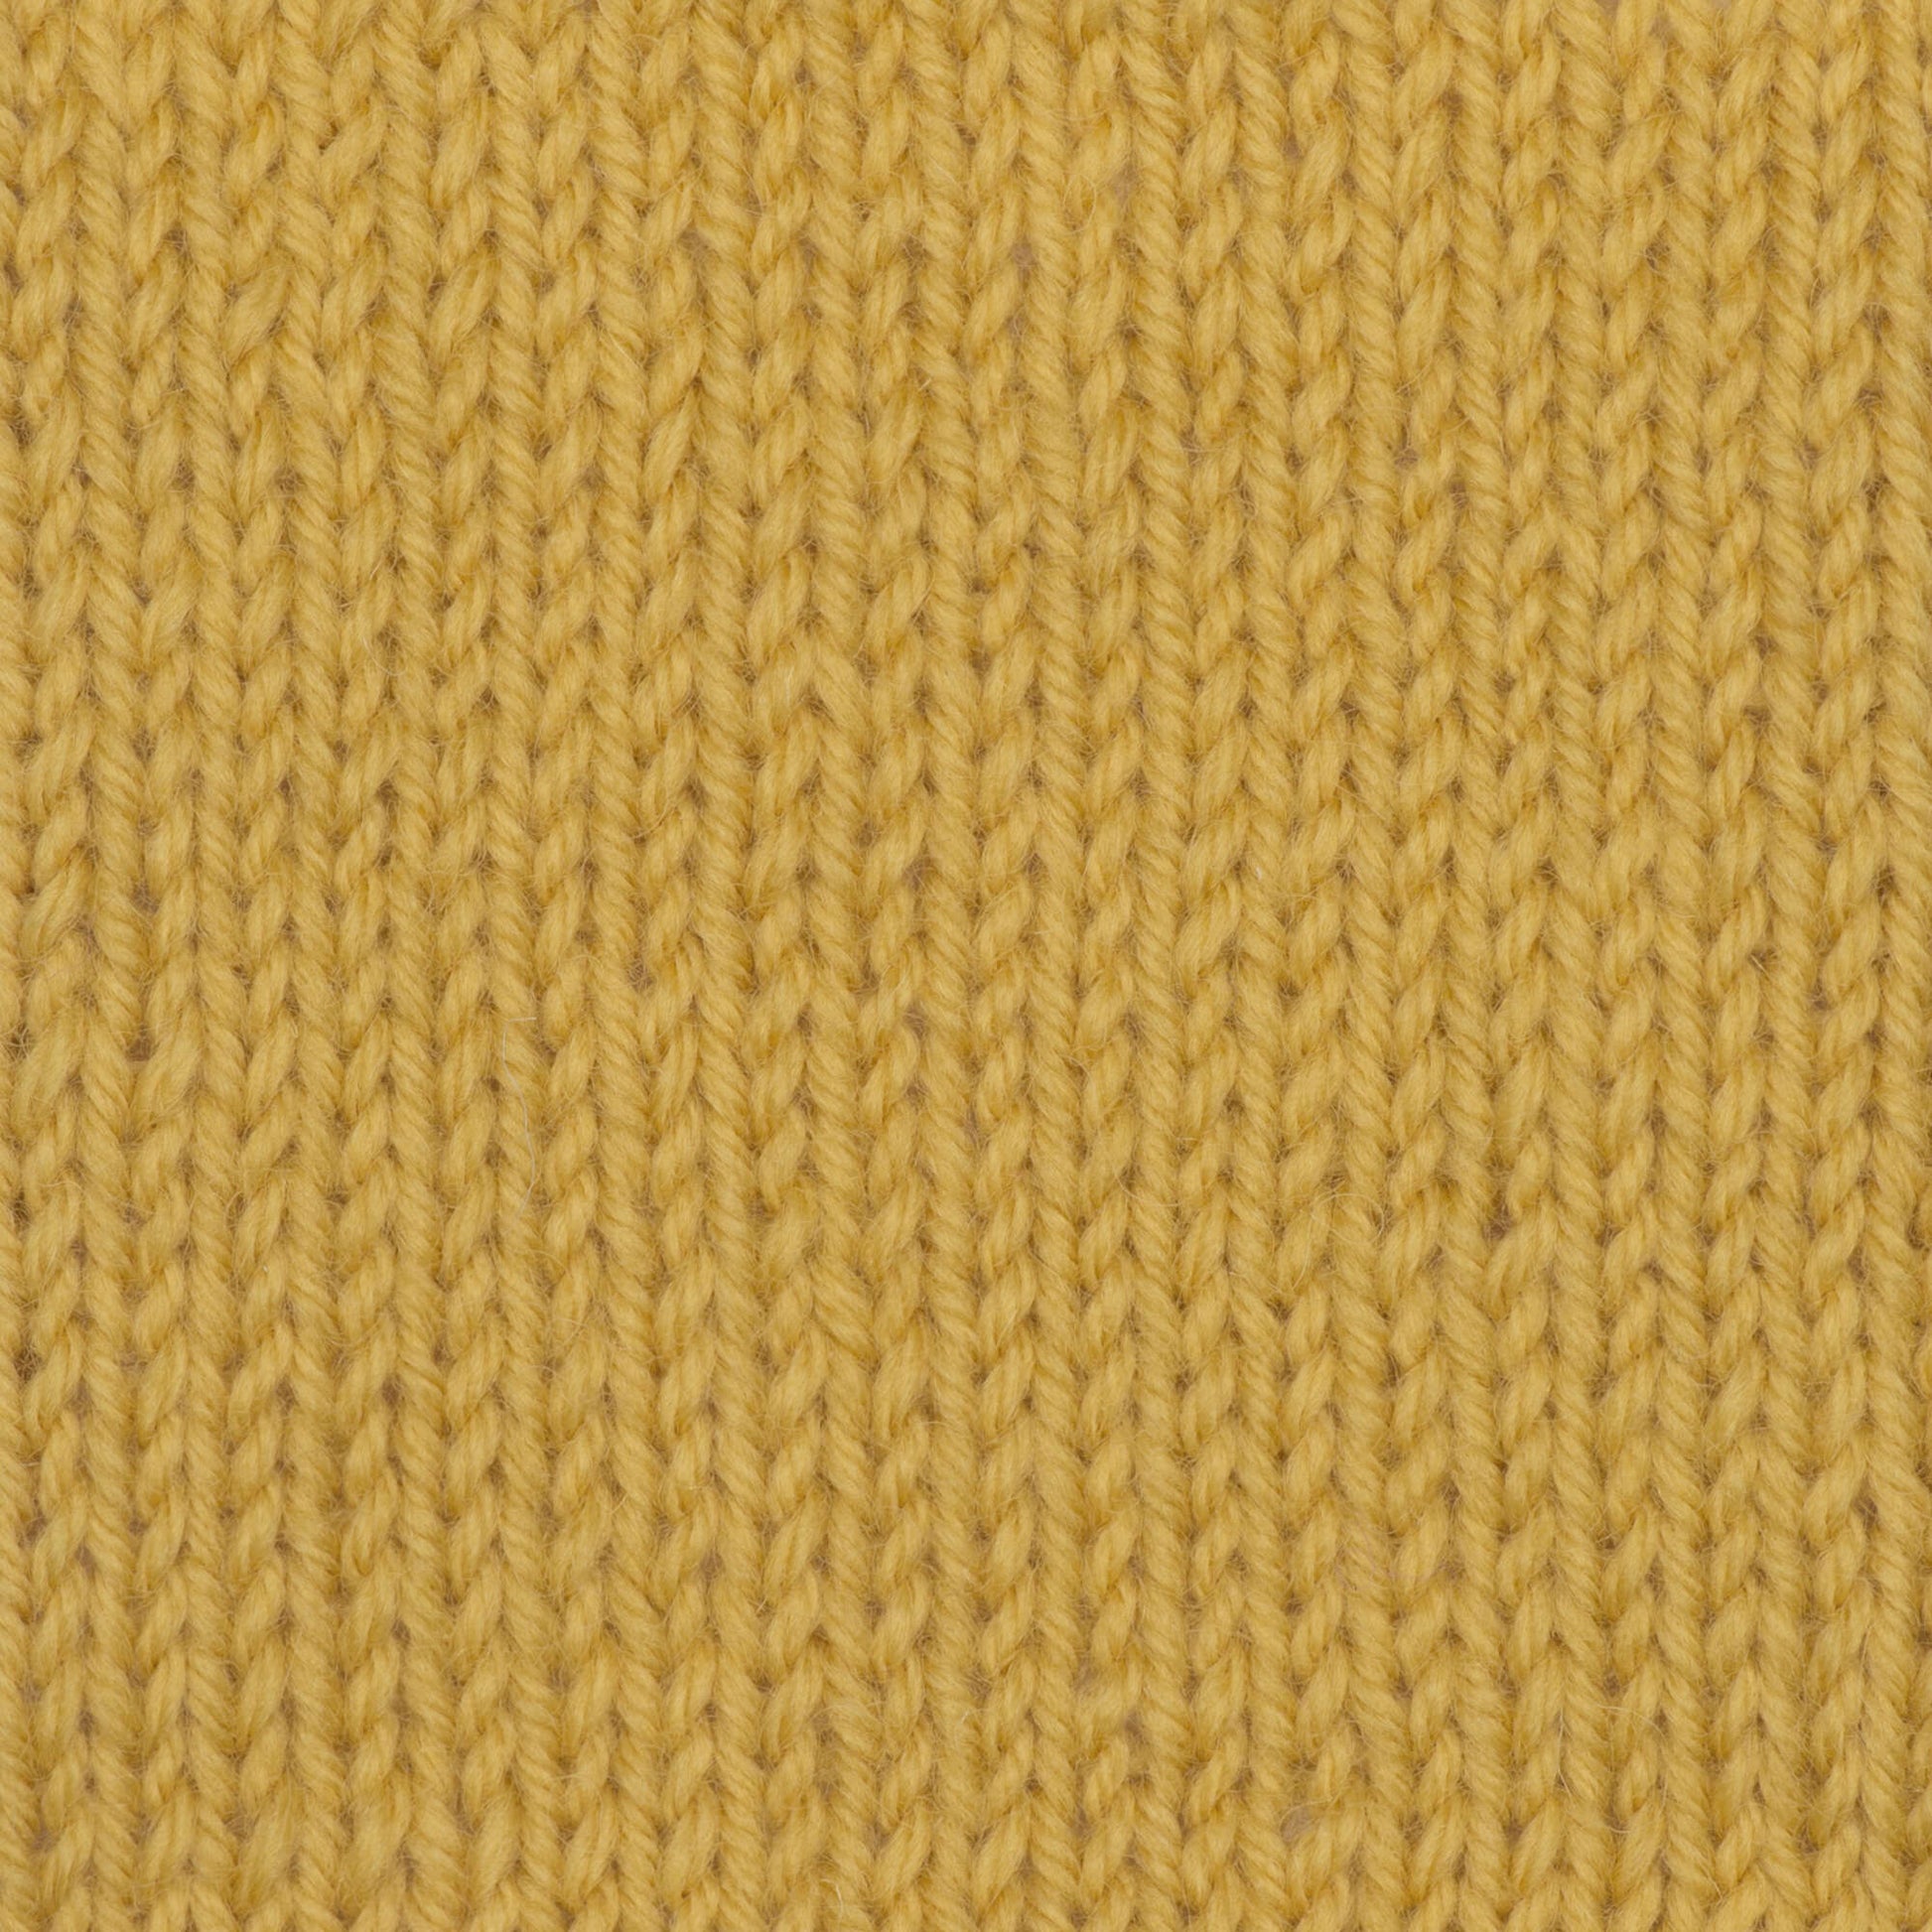 Patons Classic Wool DK Superwash Yarn - Discontinued Shades Gold